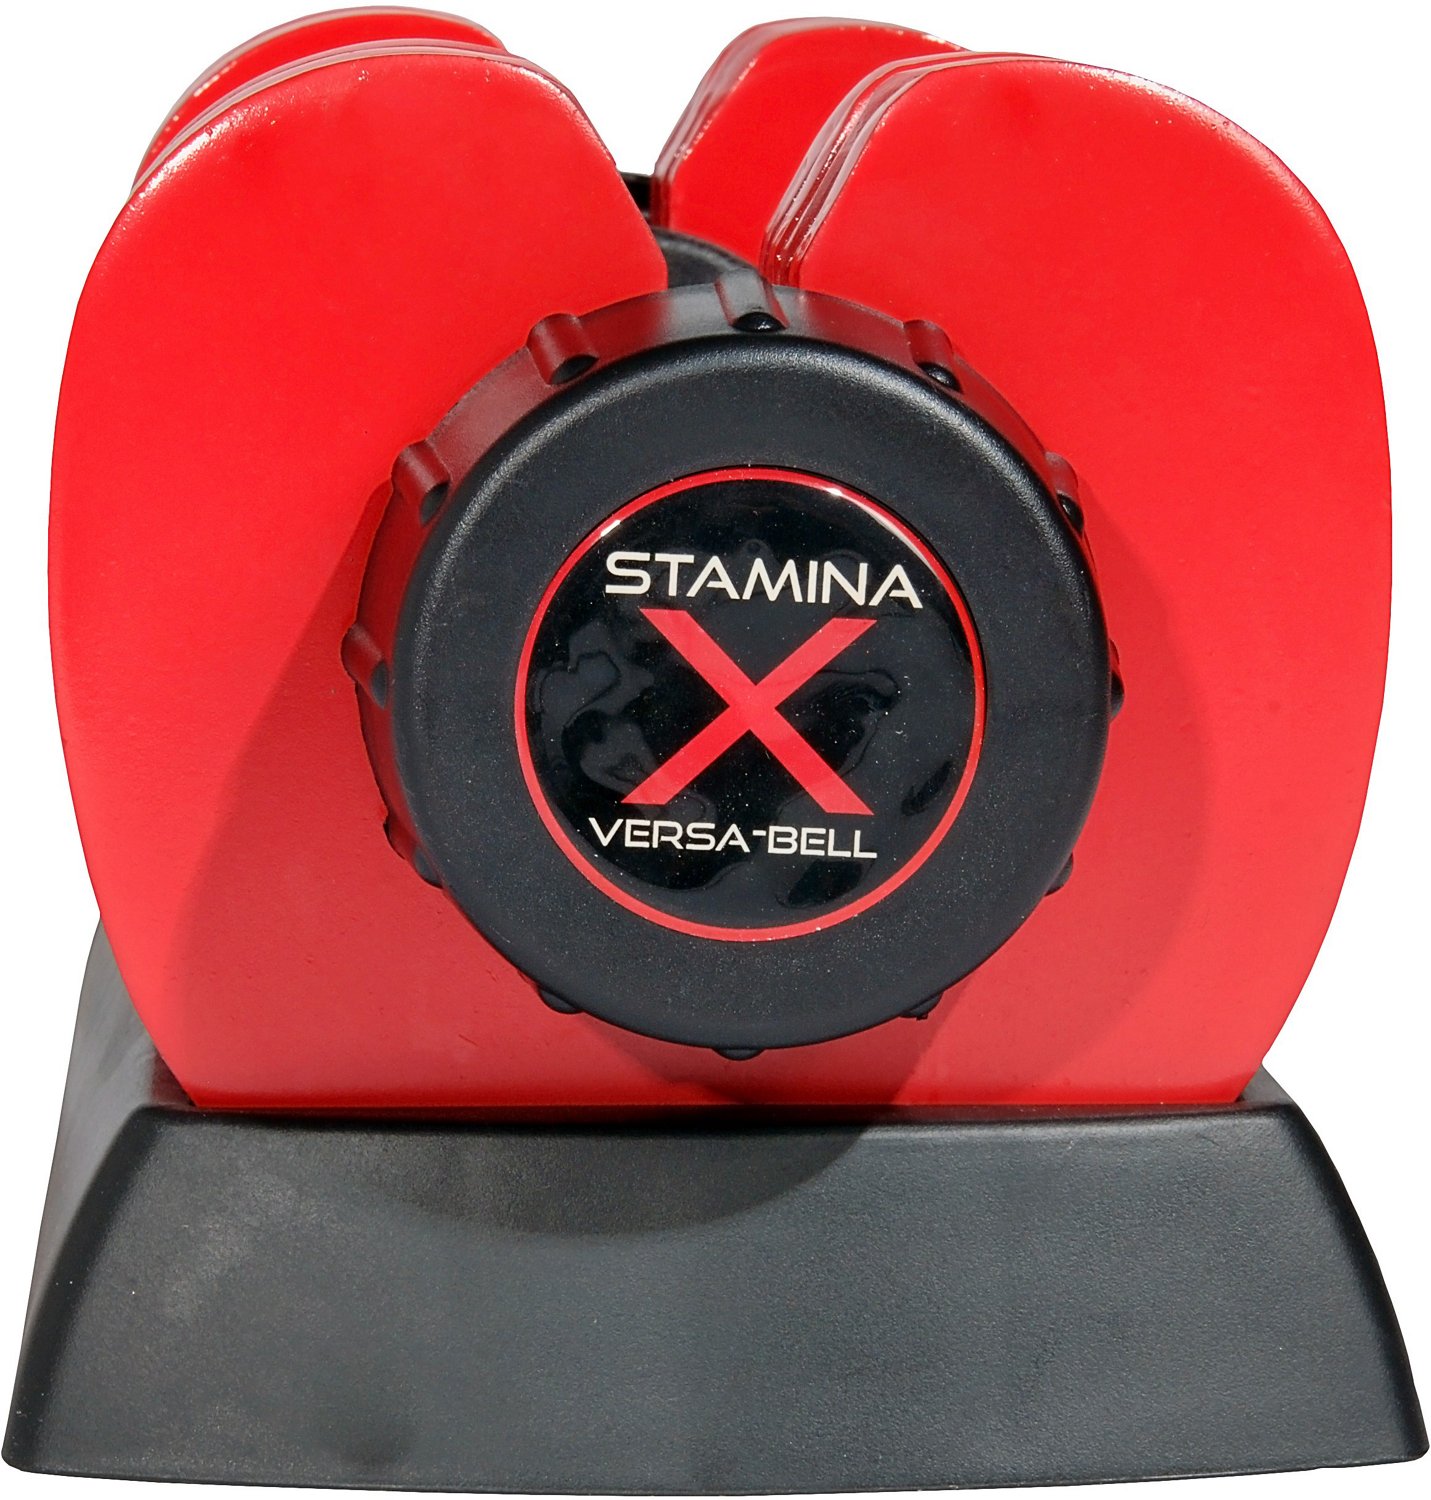 Stamina X 50 lb. Versa-Bell Dumbbell